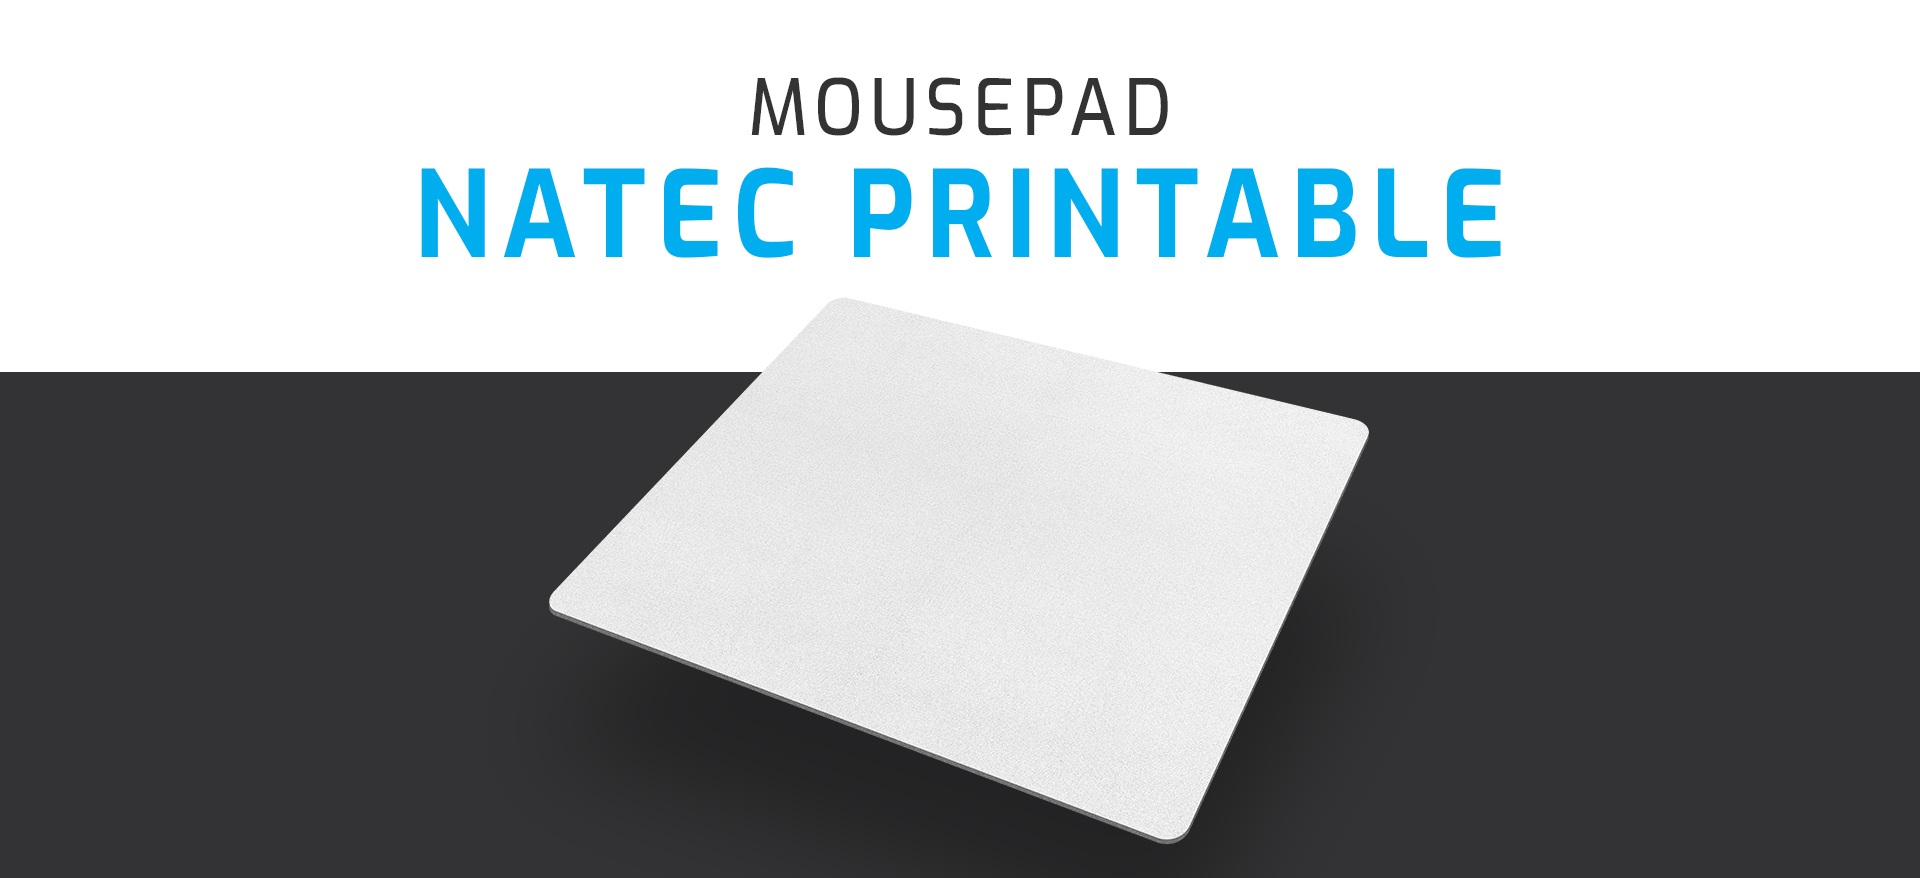 mouse pad natec printable white 300x250mm 7